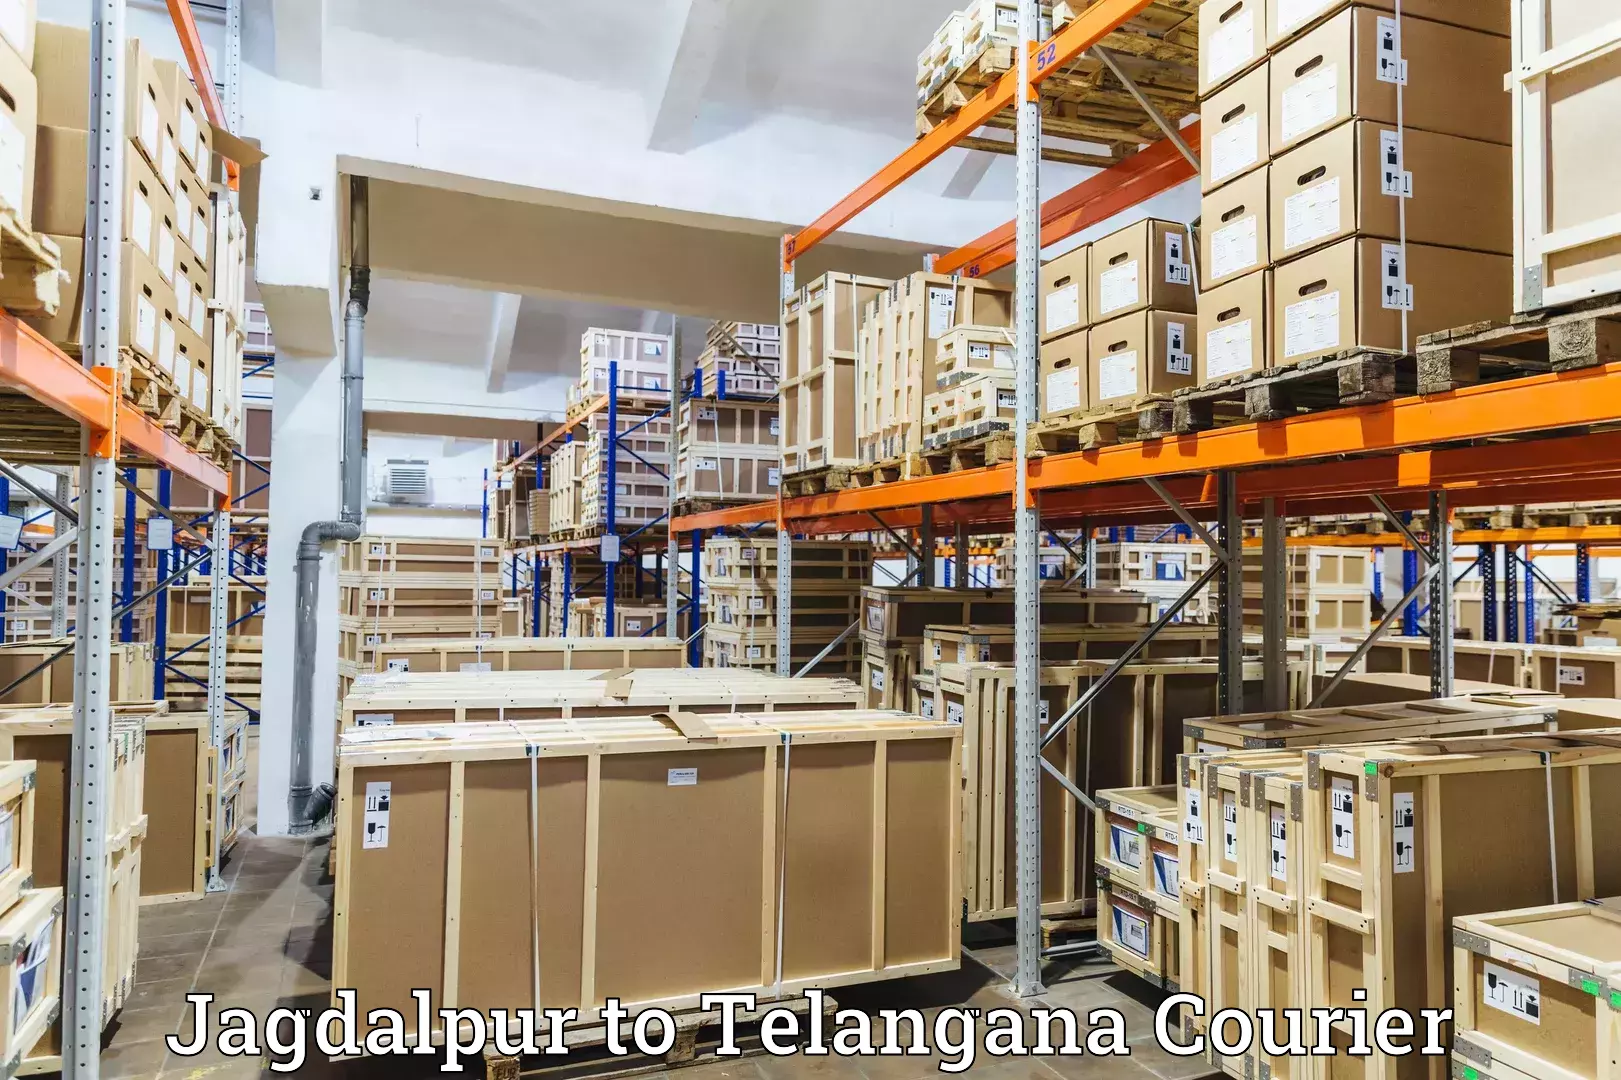 Logistics service provider Jagdalpur to Kaghaznagar